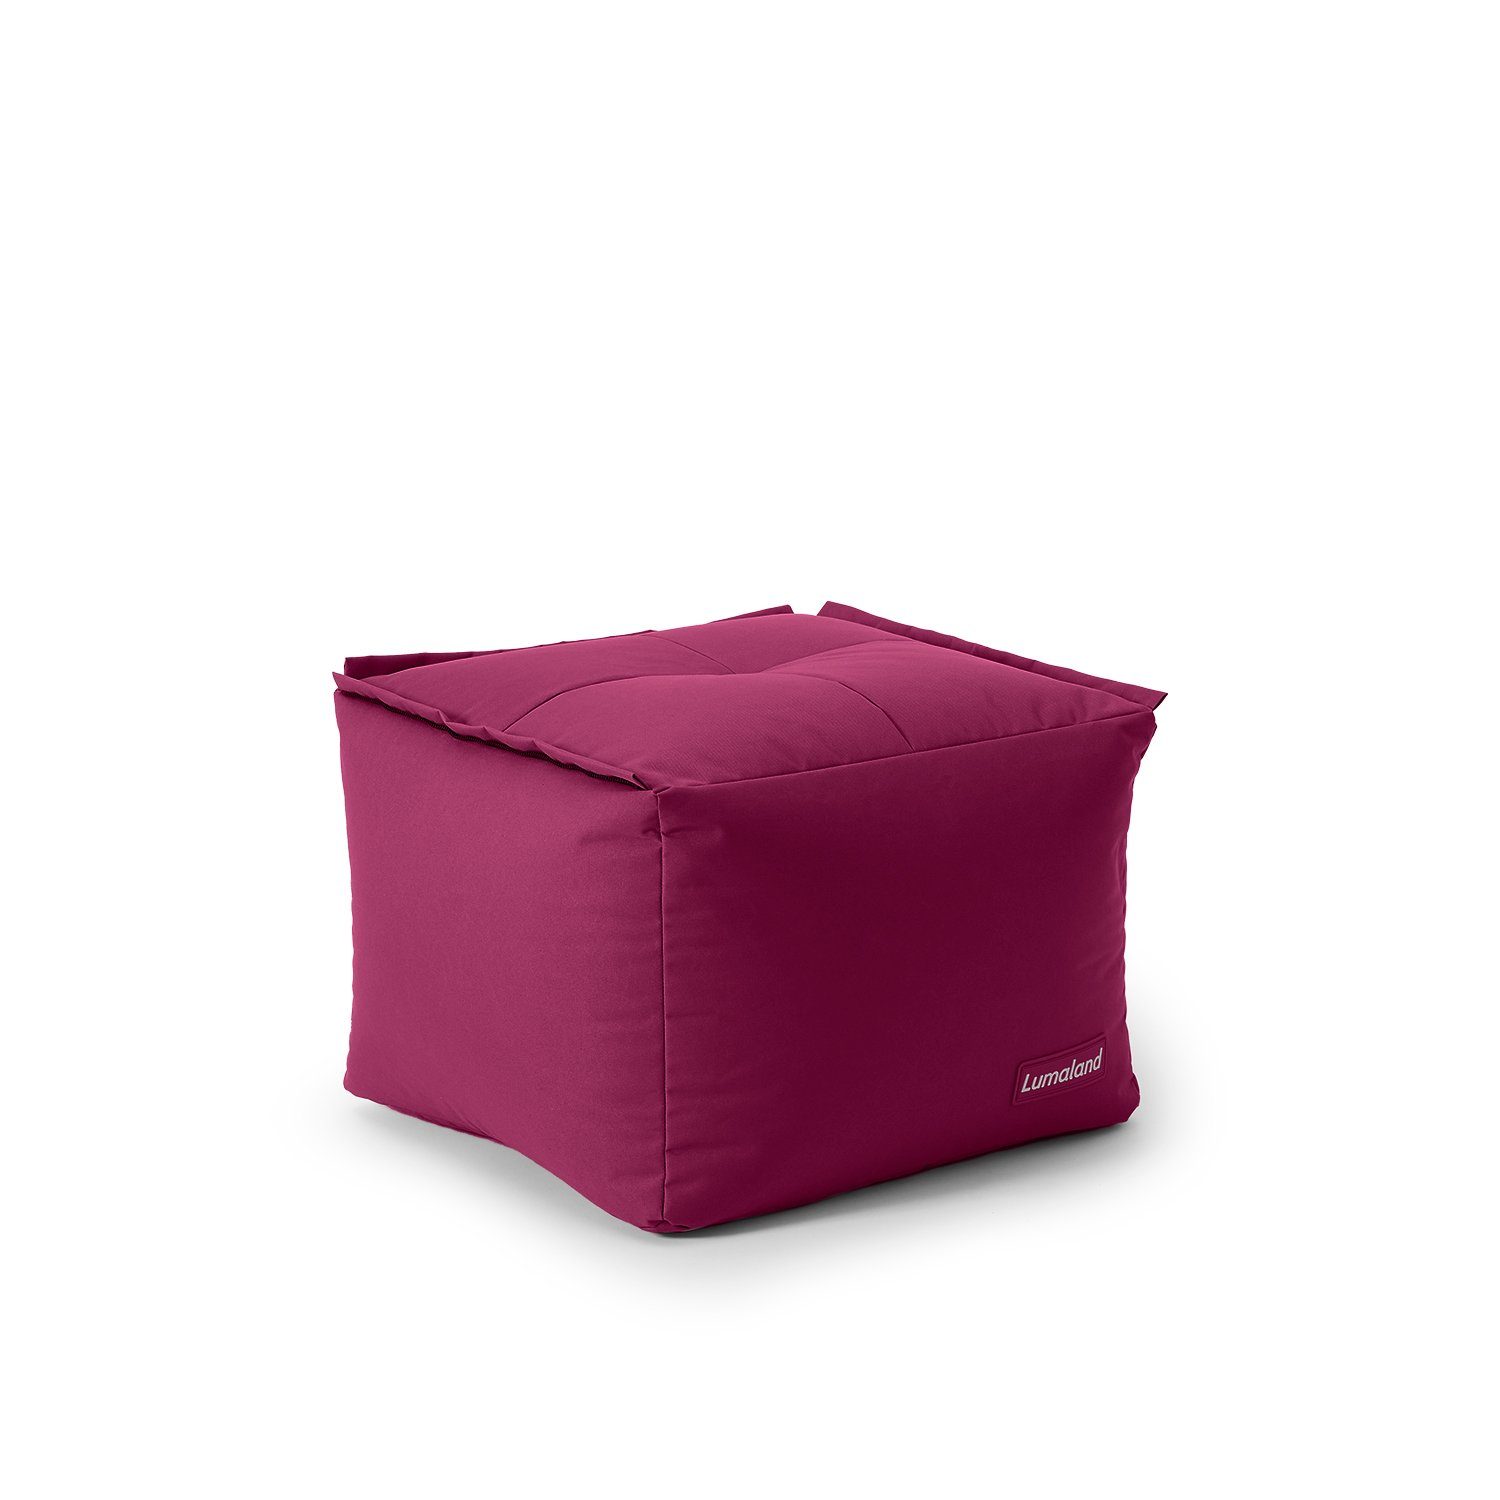 Loungeset Sofa waschbar System, individuell Modularen In- abnehmbarer kombinierbar Sessel rotwein Lumaland mit dem Bezug & erweiterbar wasserfest outdoor